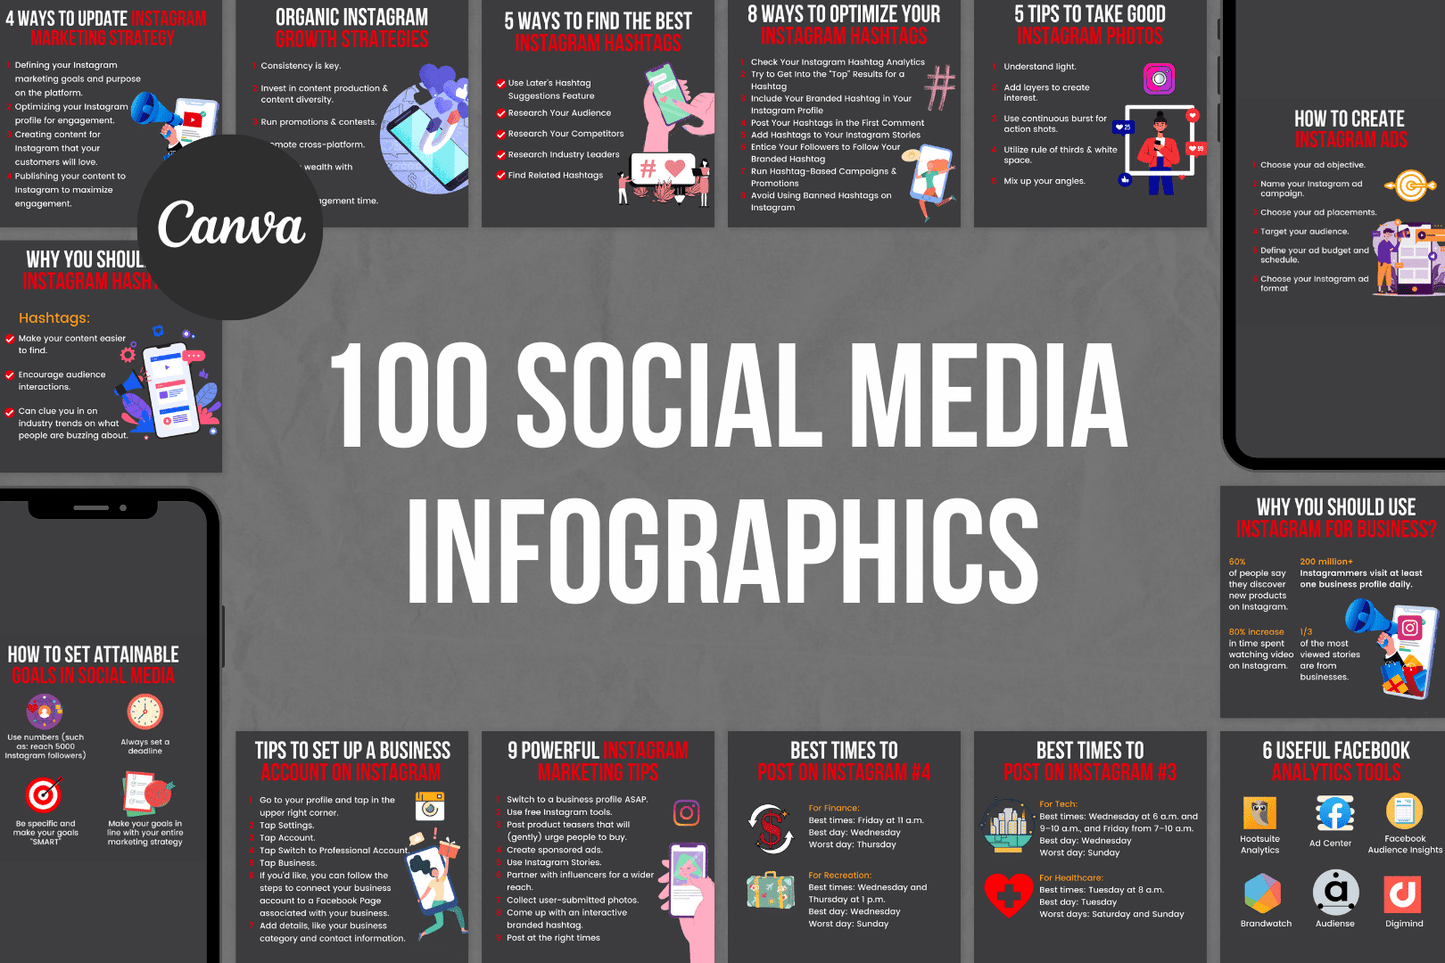 100 Social Media Infographics